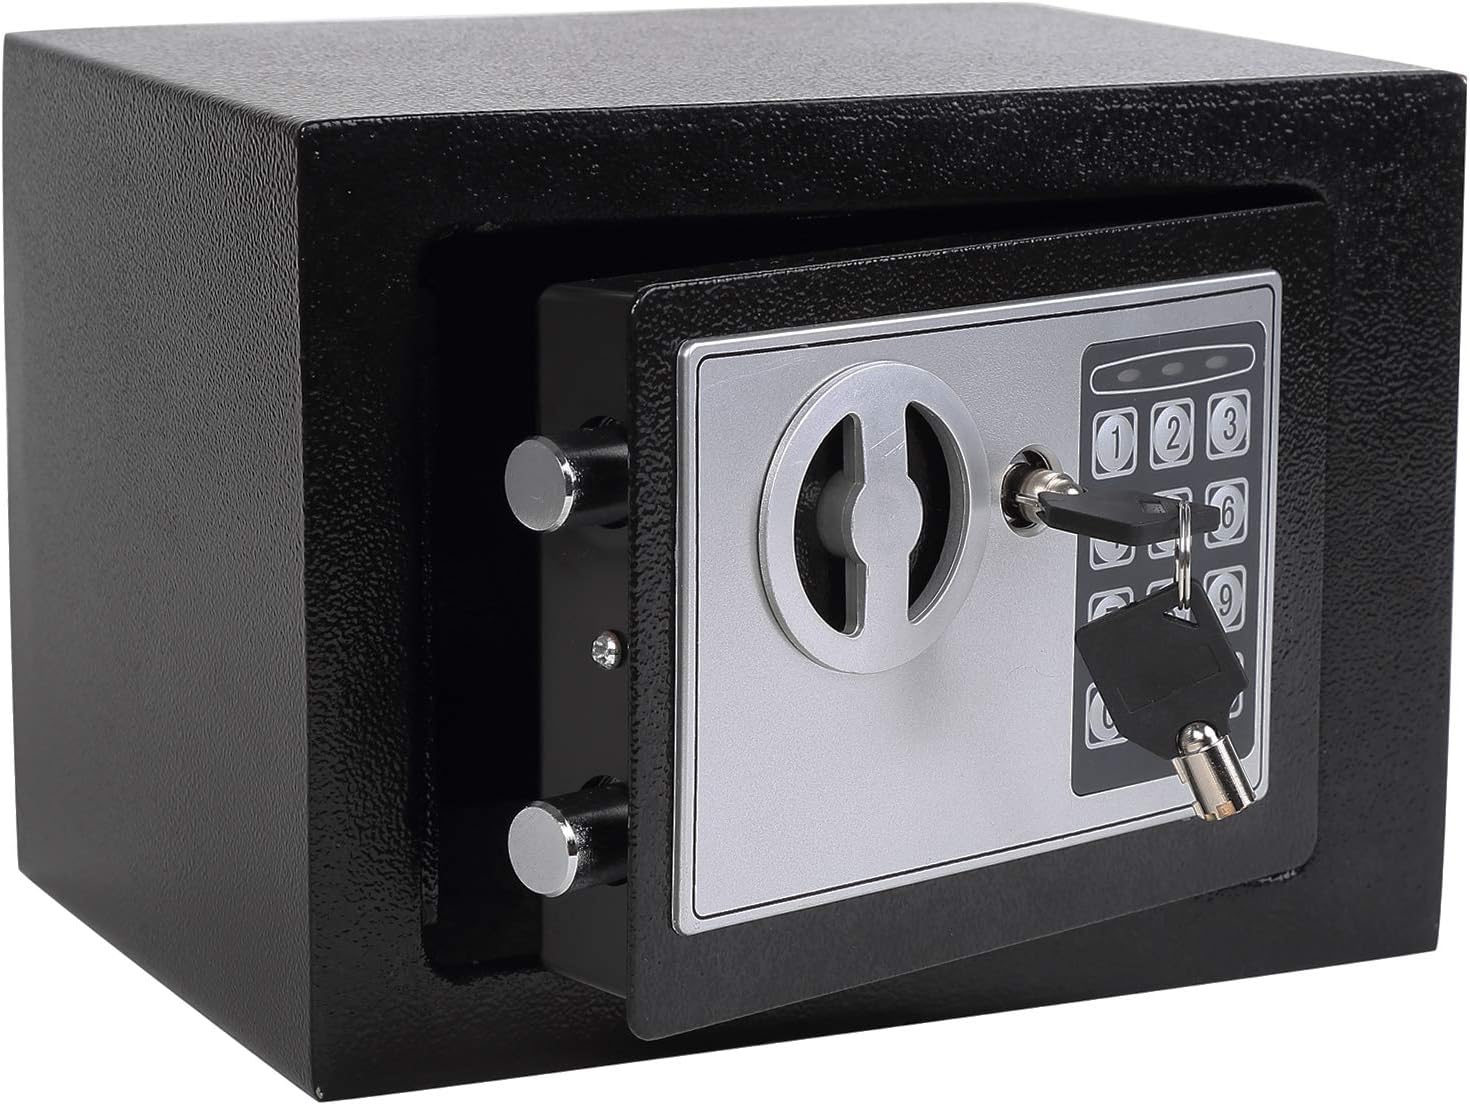 Yuanshikj Electronic Deluxe Digital Security Safe Box [...]